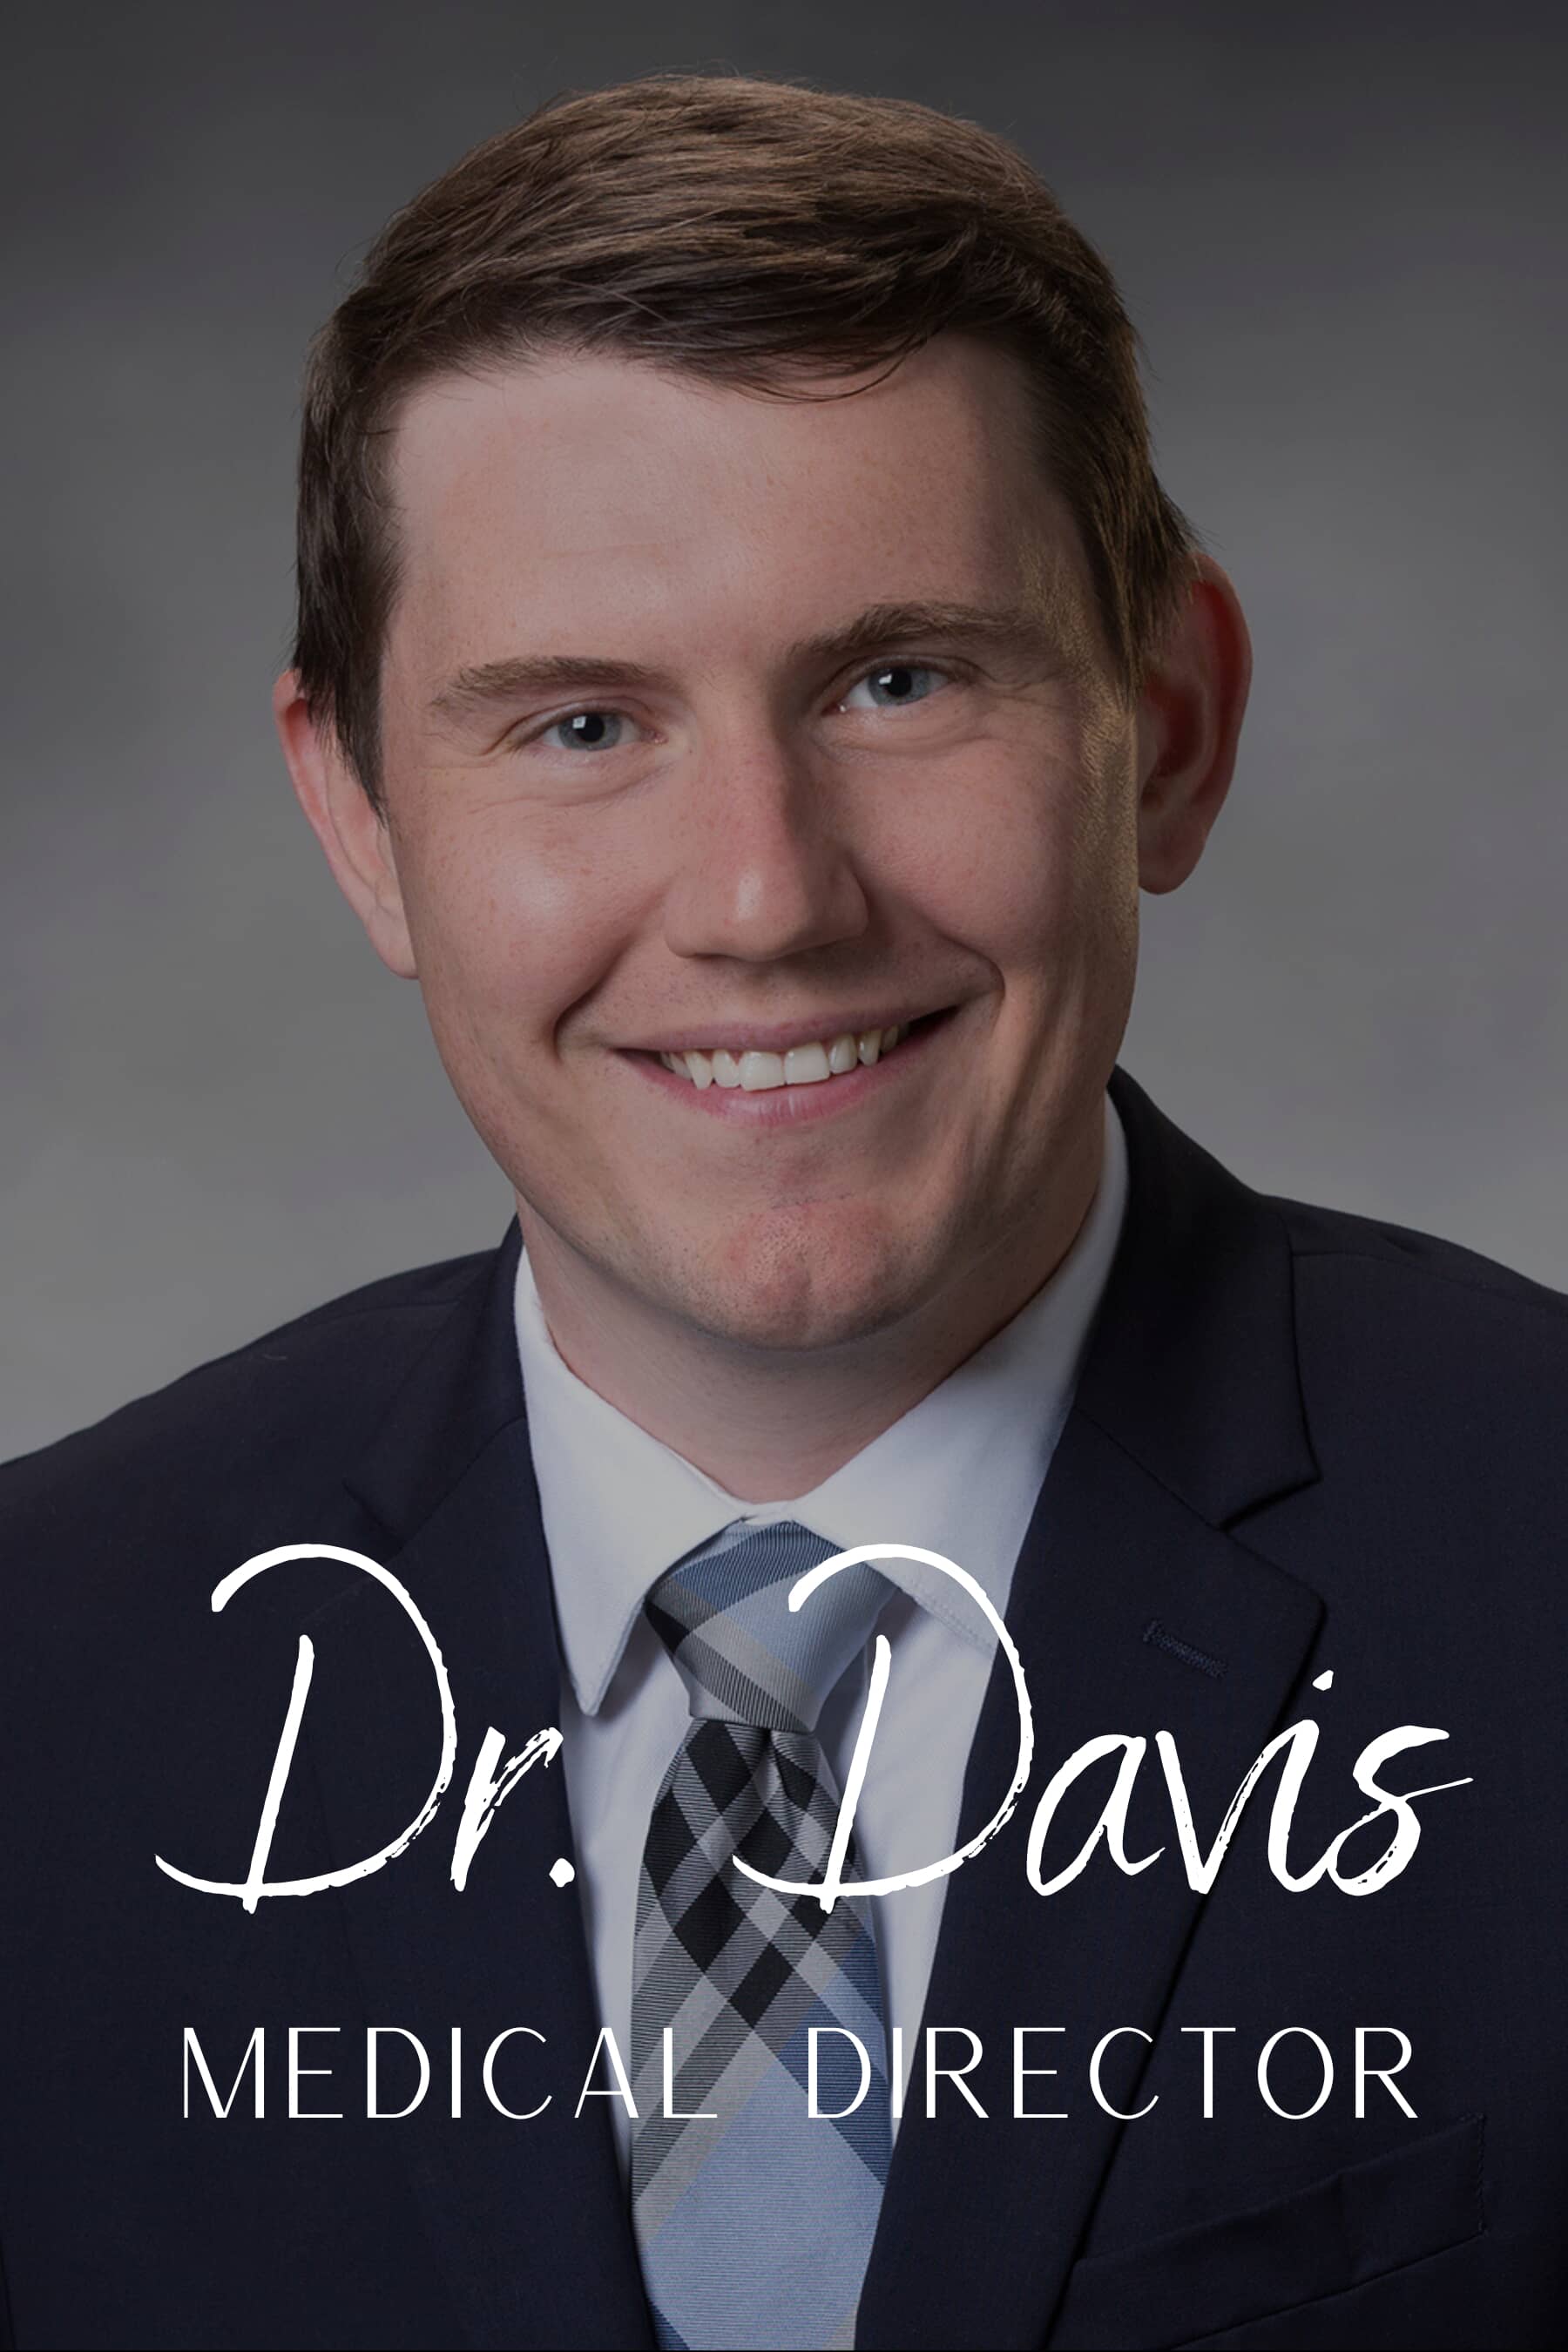 Dr. Andrew Davis